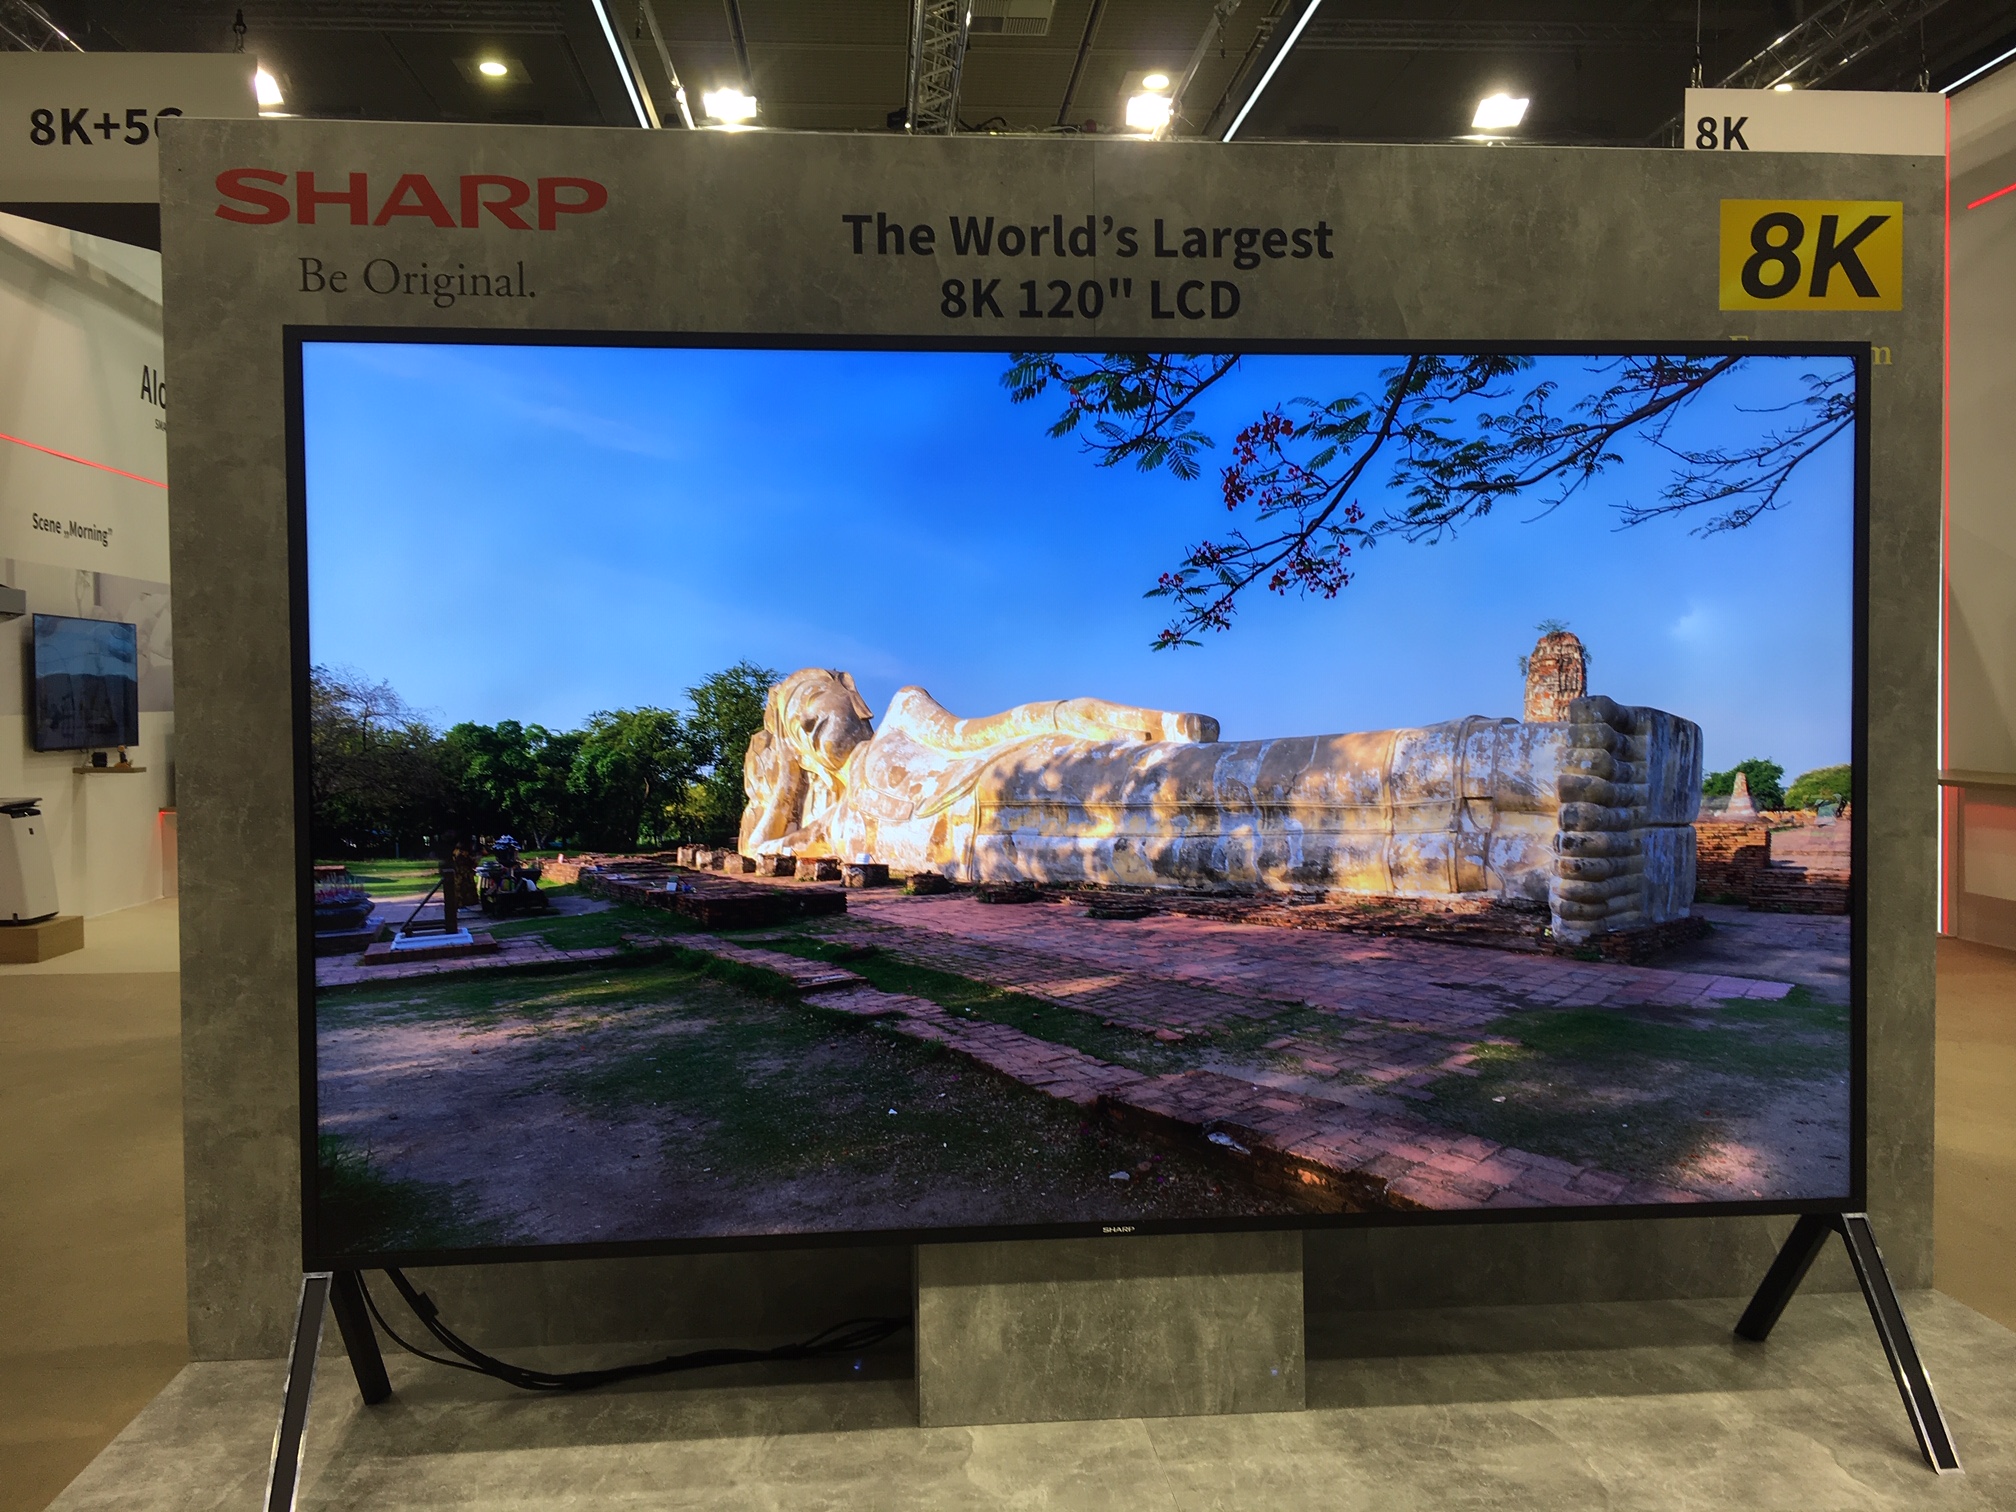 SHARP showcases world’s largest 8K LC display at IFA2019